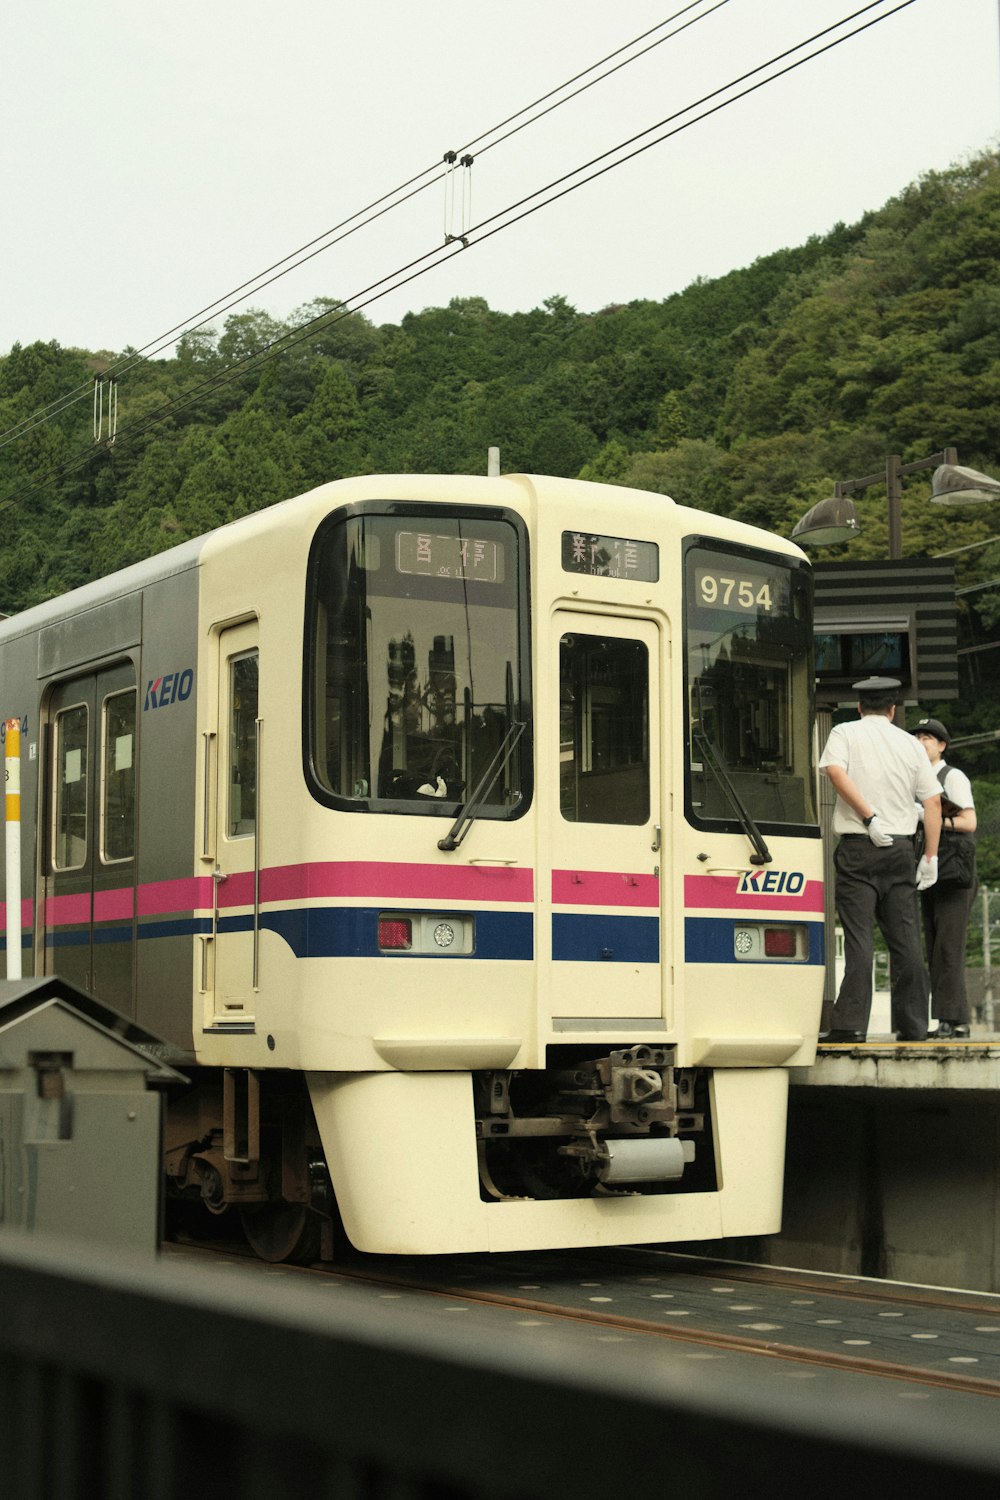 a man standing on a train platform next to a train